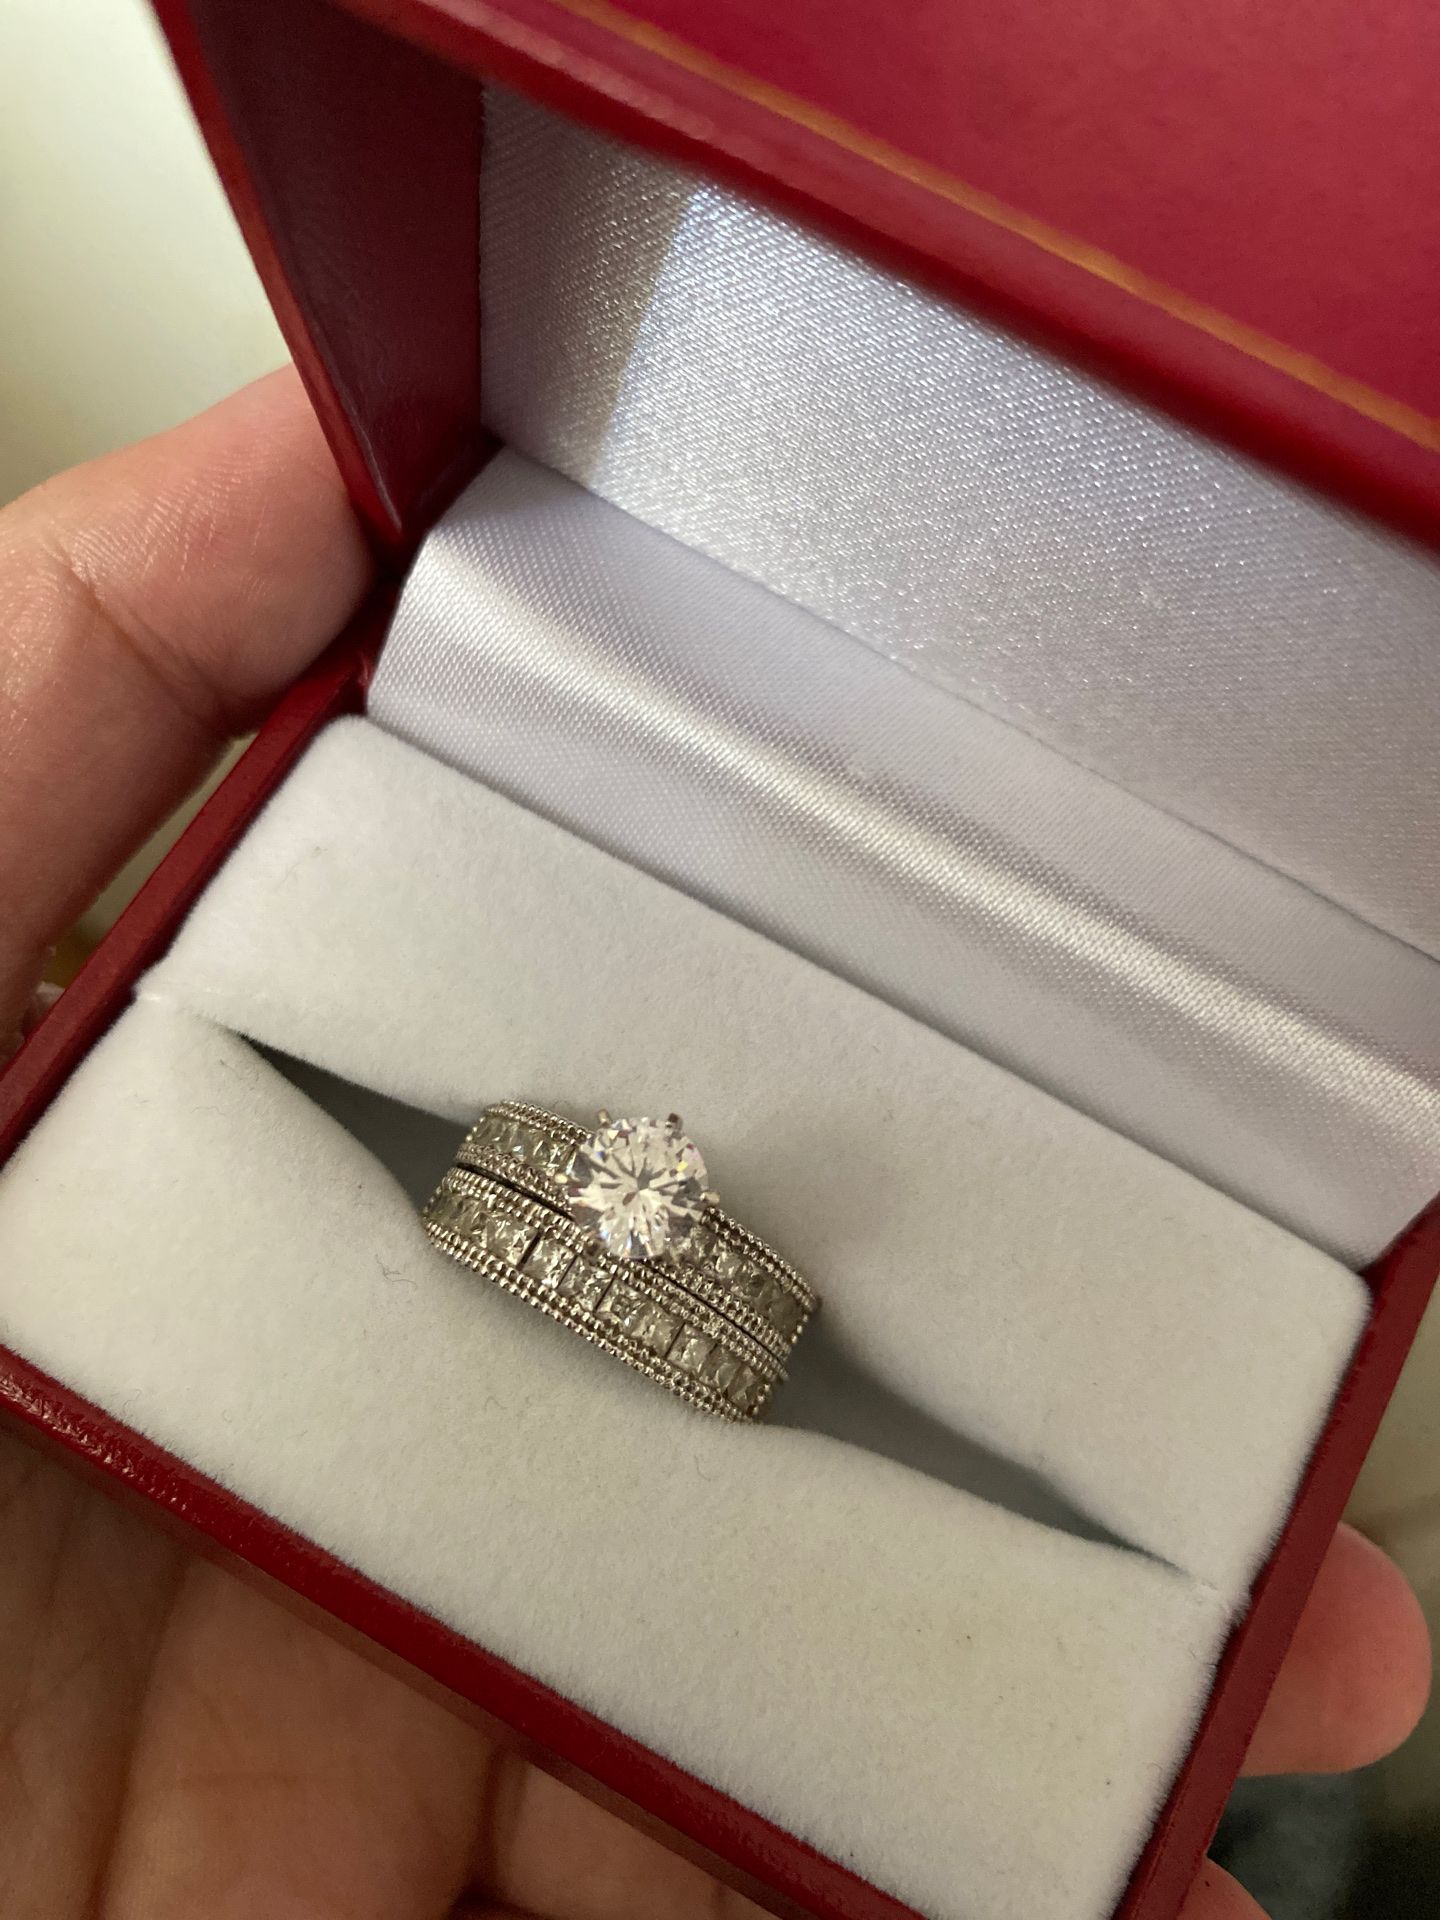 18k white gold engagement/wedding ring set